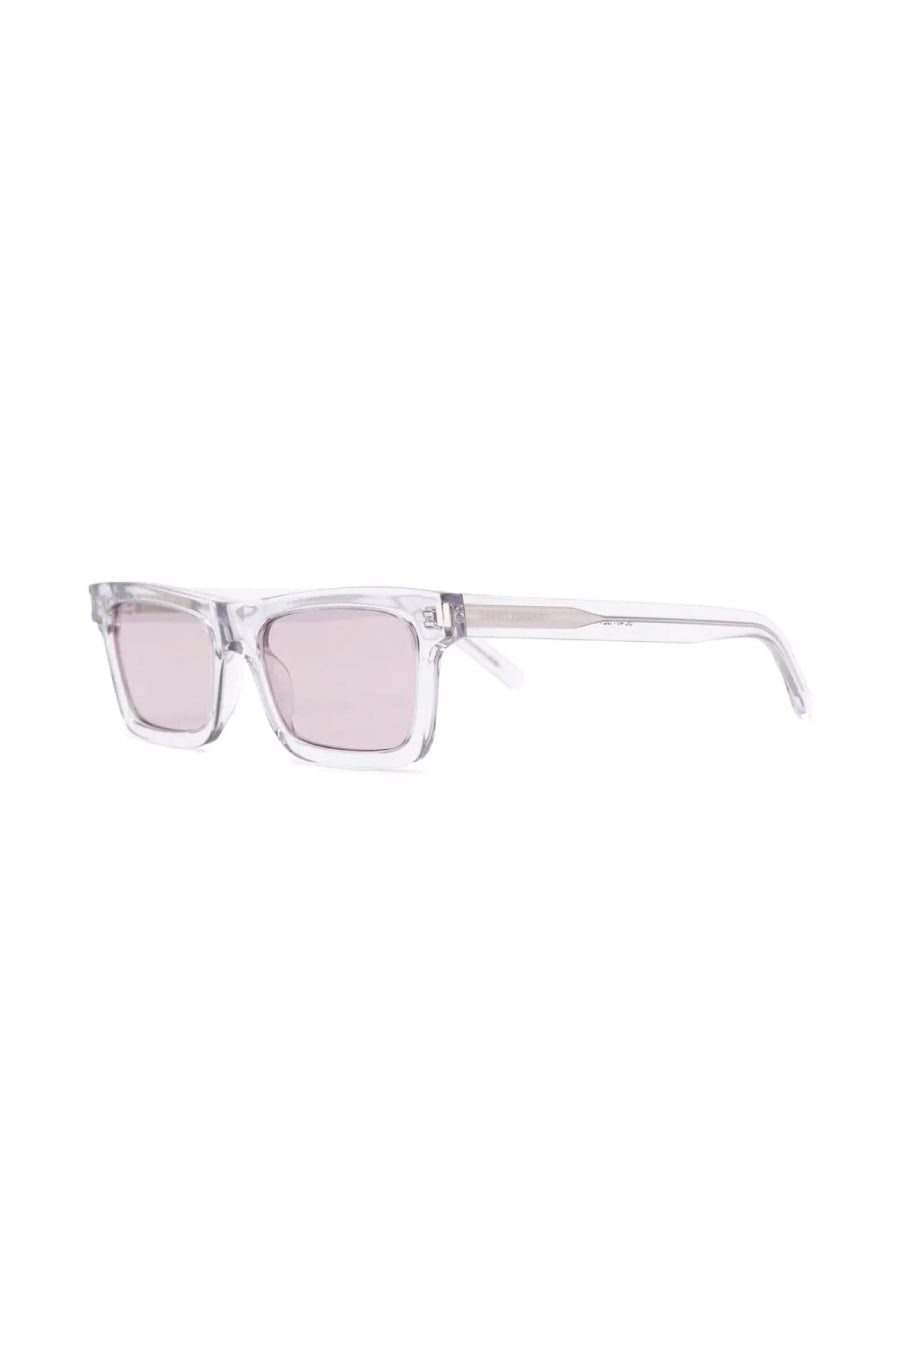 Saint Laurent Betty Sunglasses - Grey